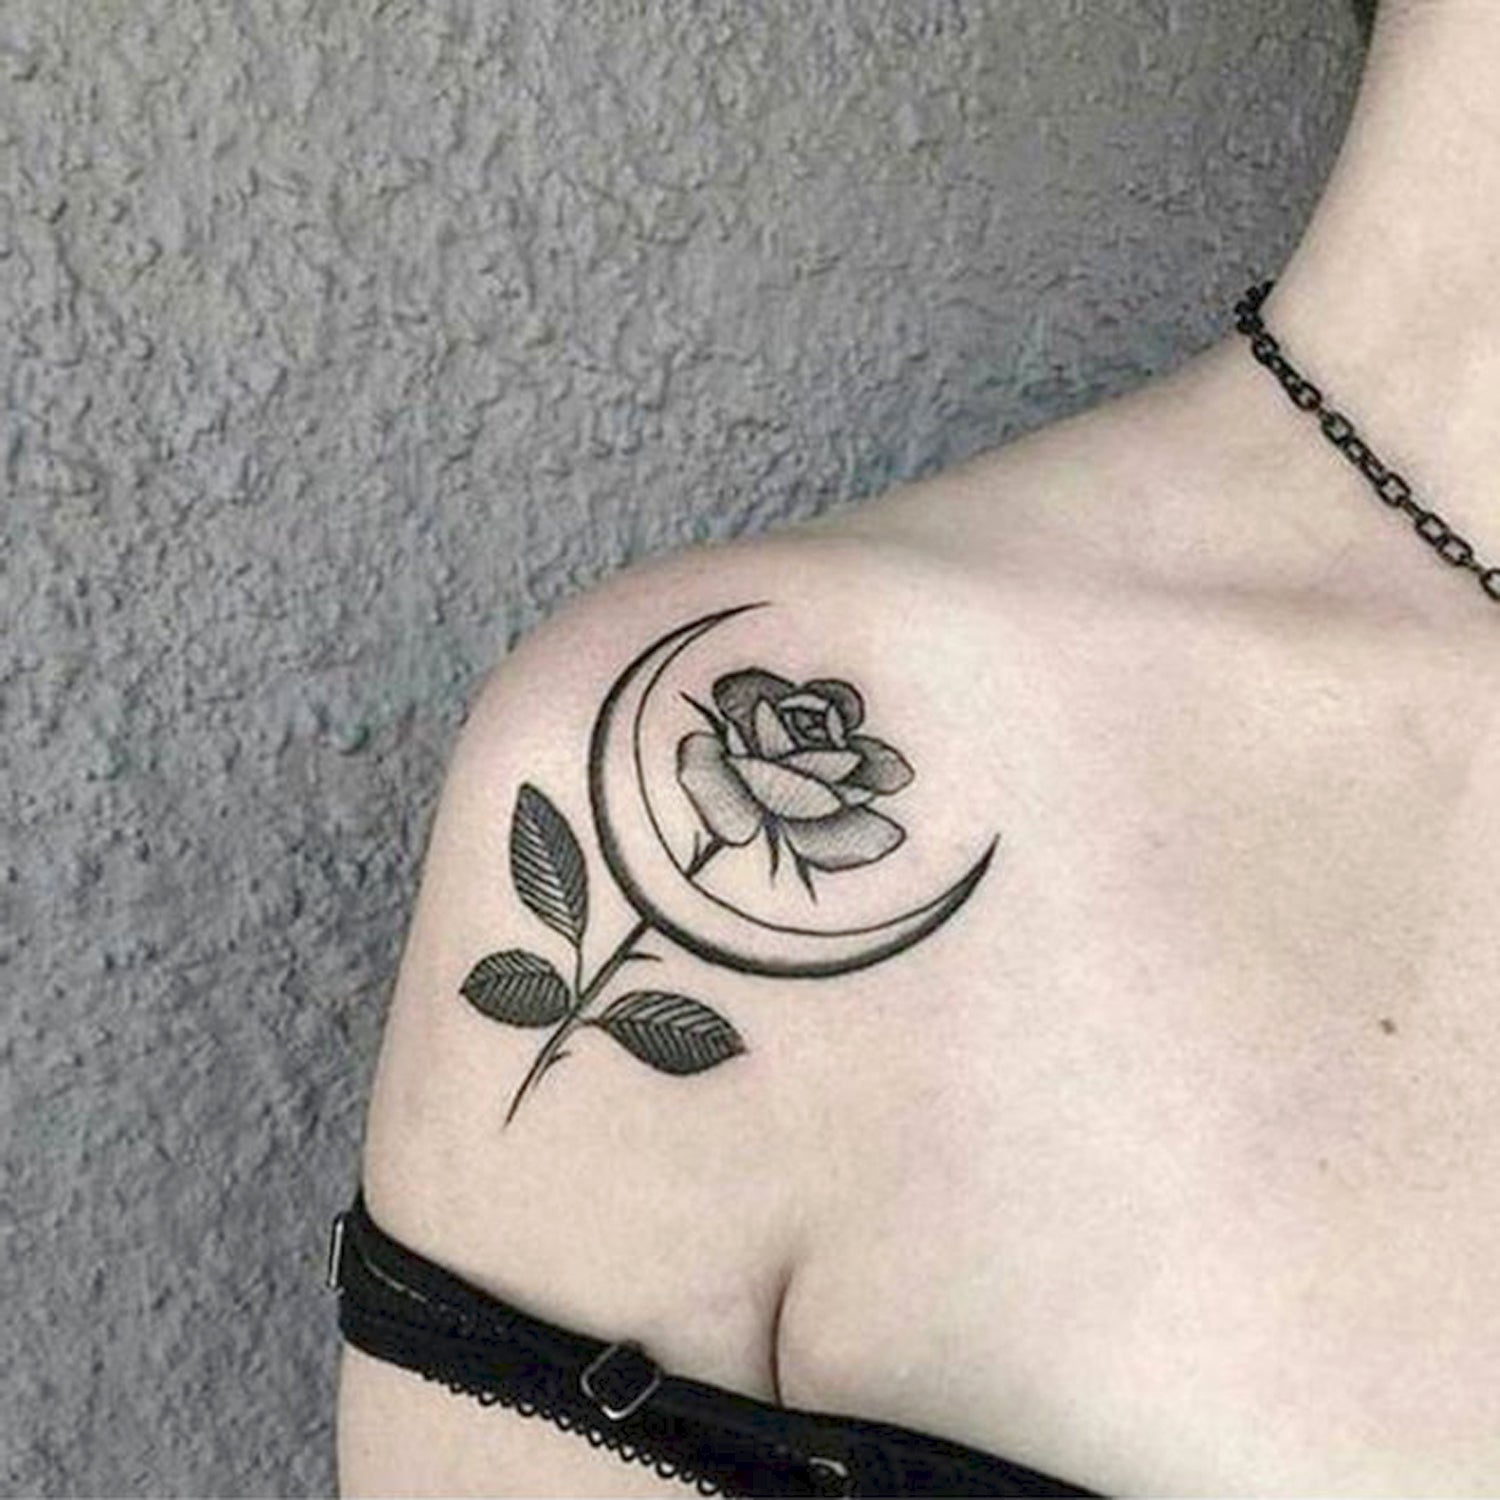 Rose tattoo Stock Photos, Royalty Free Rose tattoo Images | Depositphotos